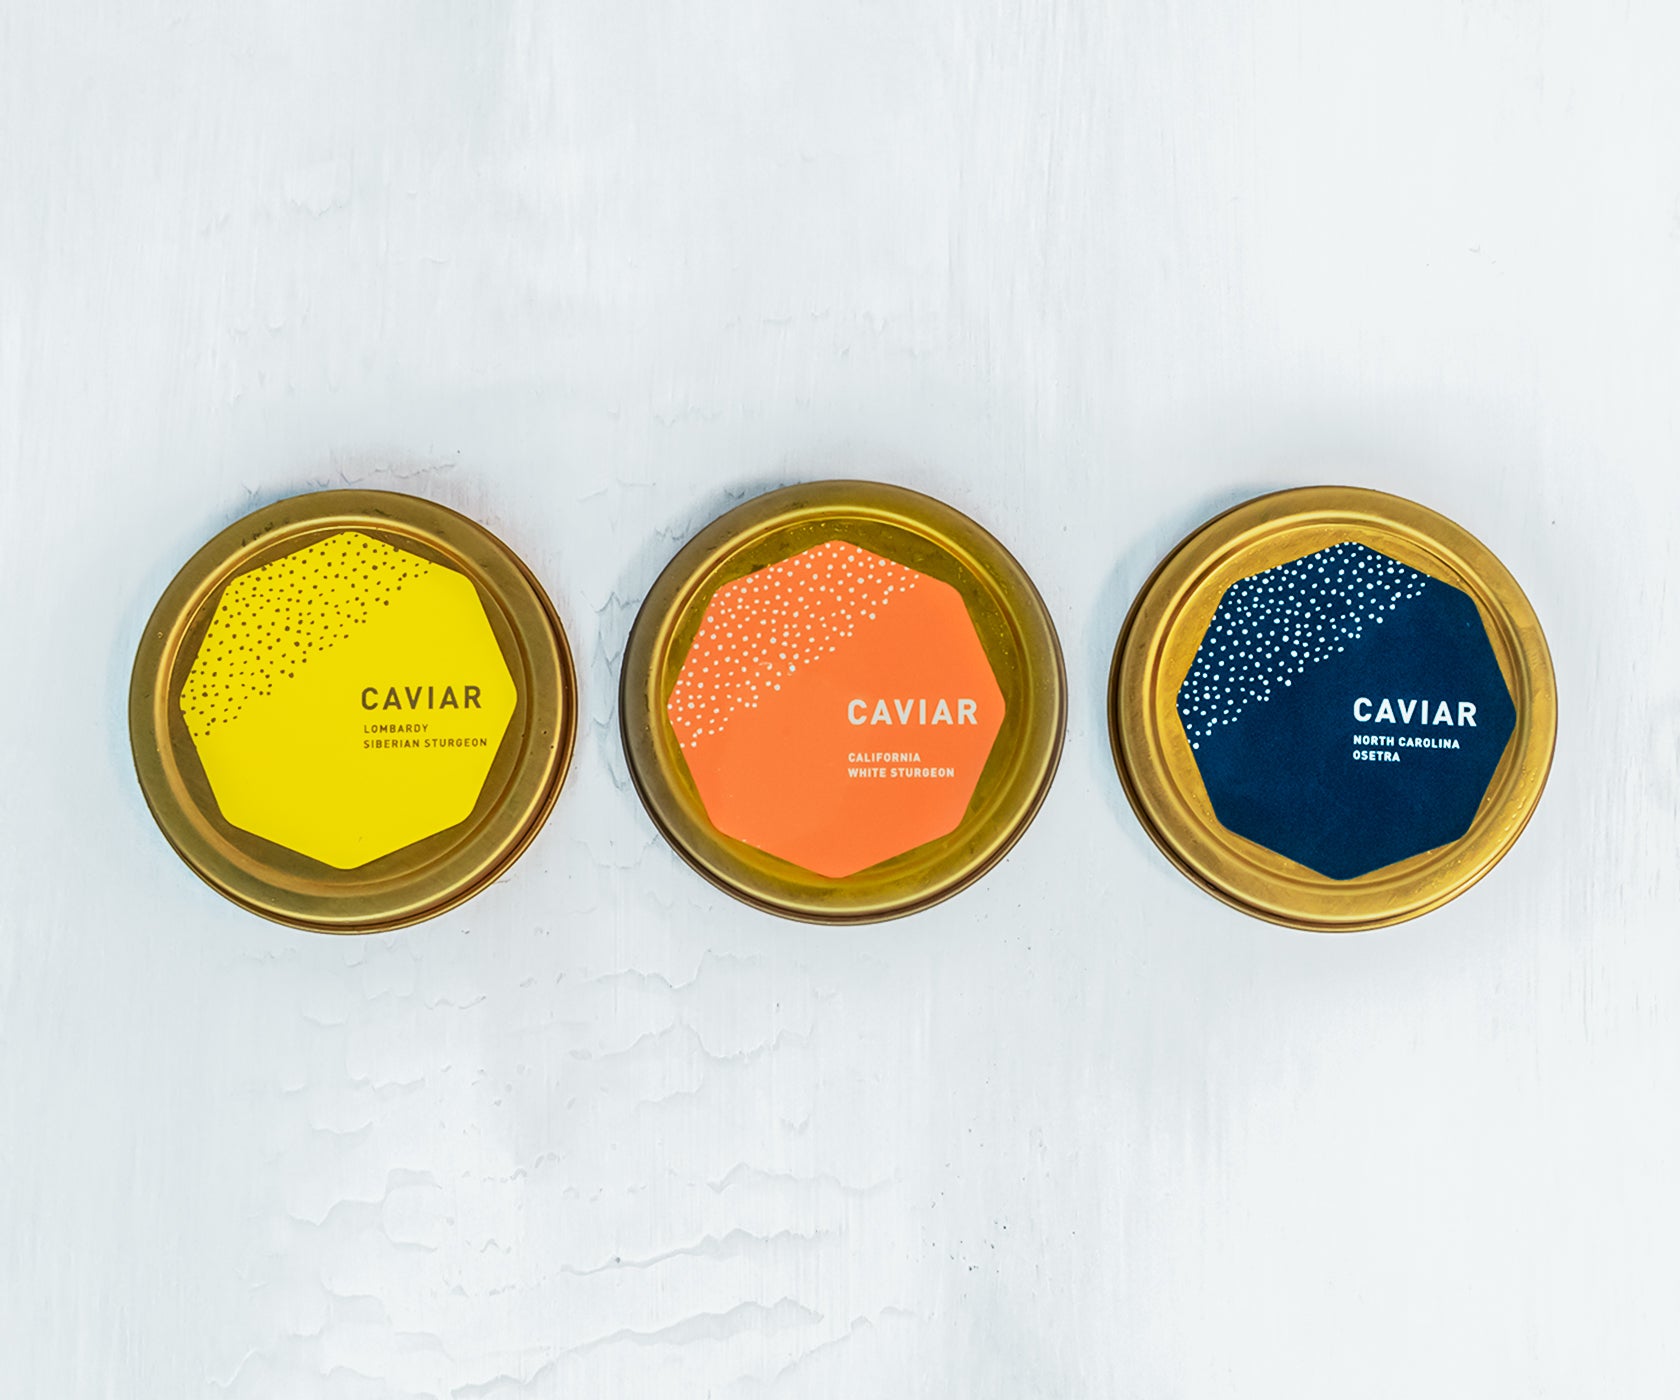 The Caviar Starter Pack